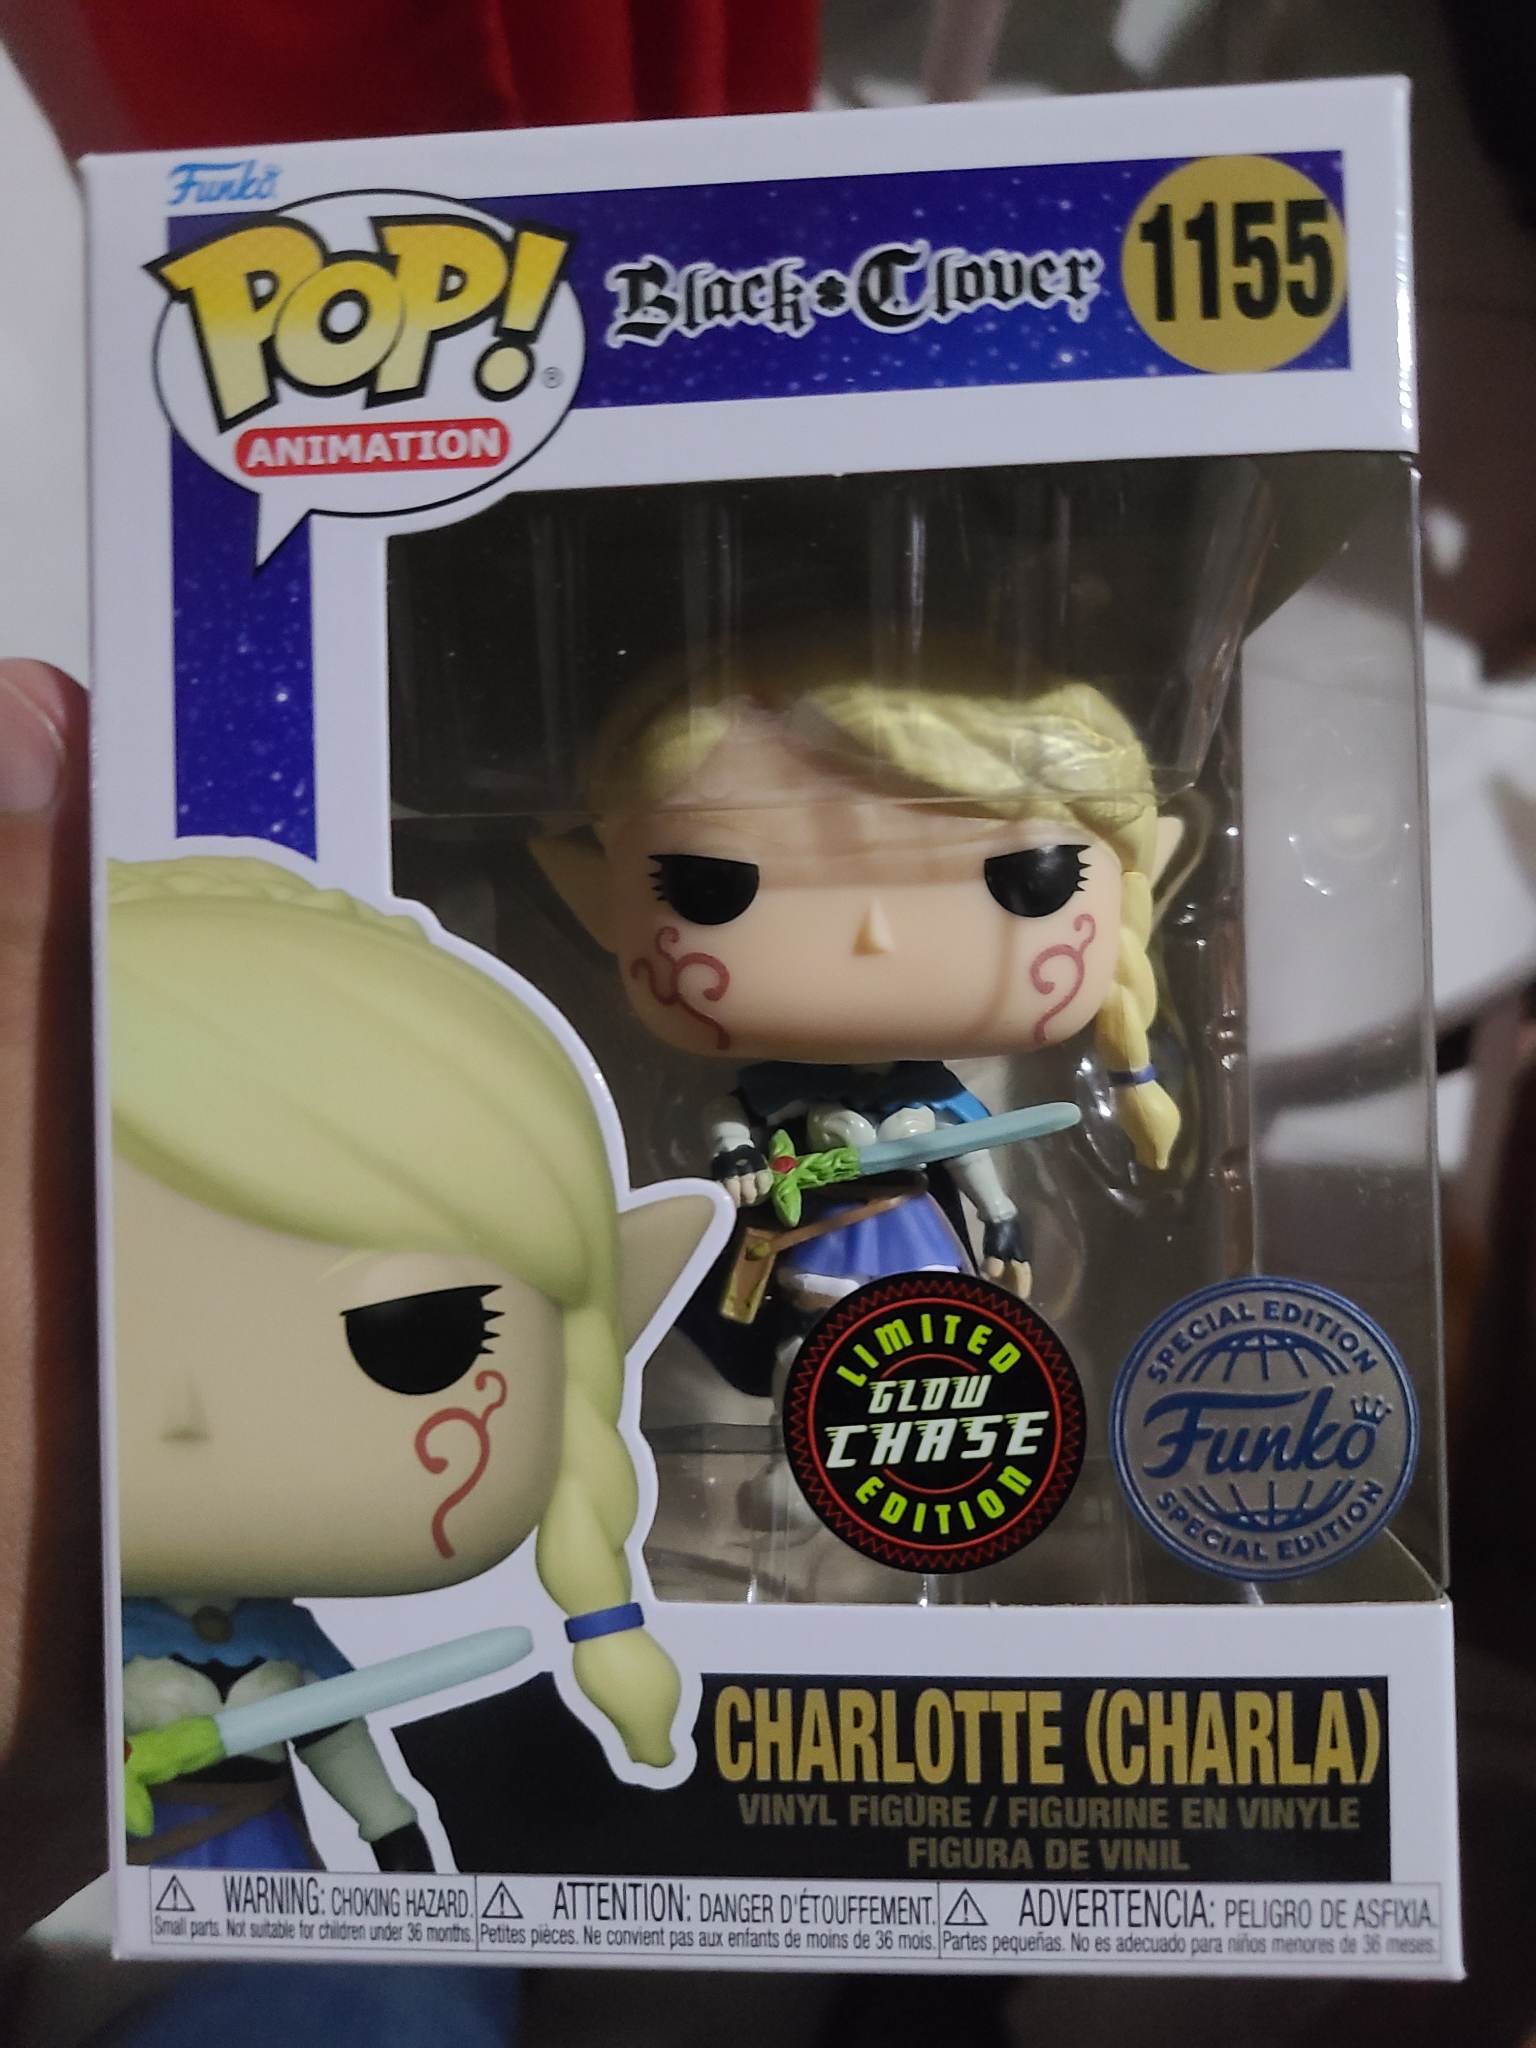 Funko POP! Animation Black Clover Charlotte (Charla) Edition